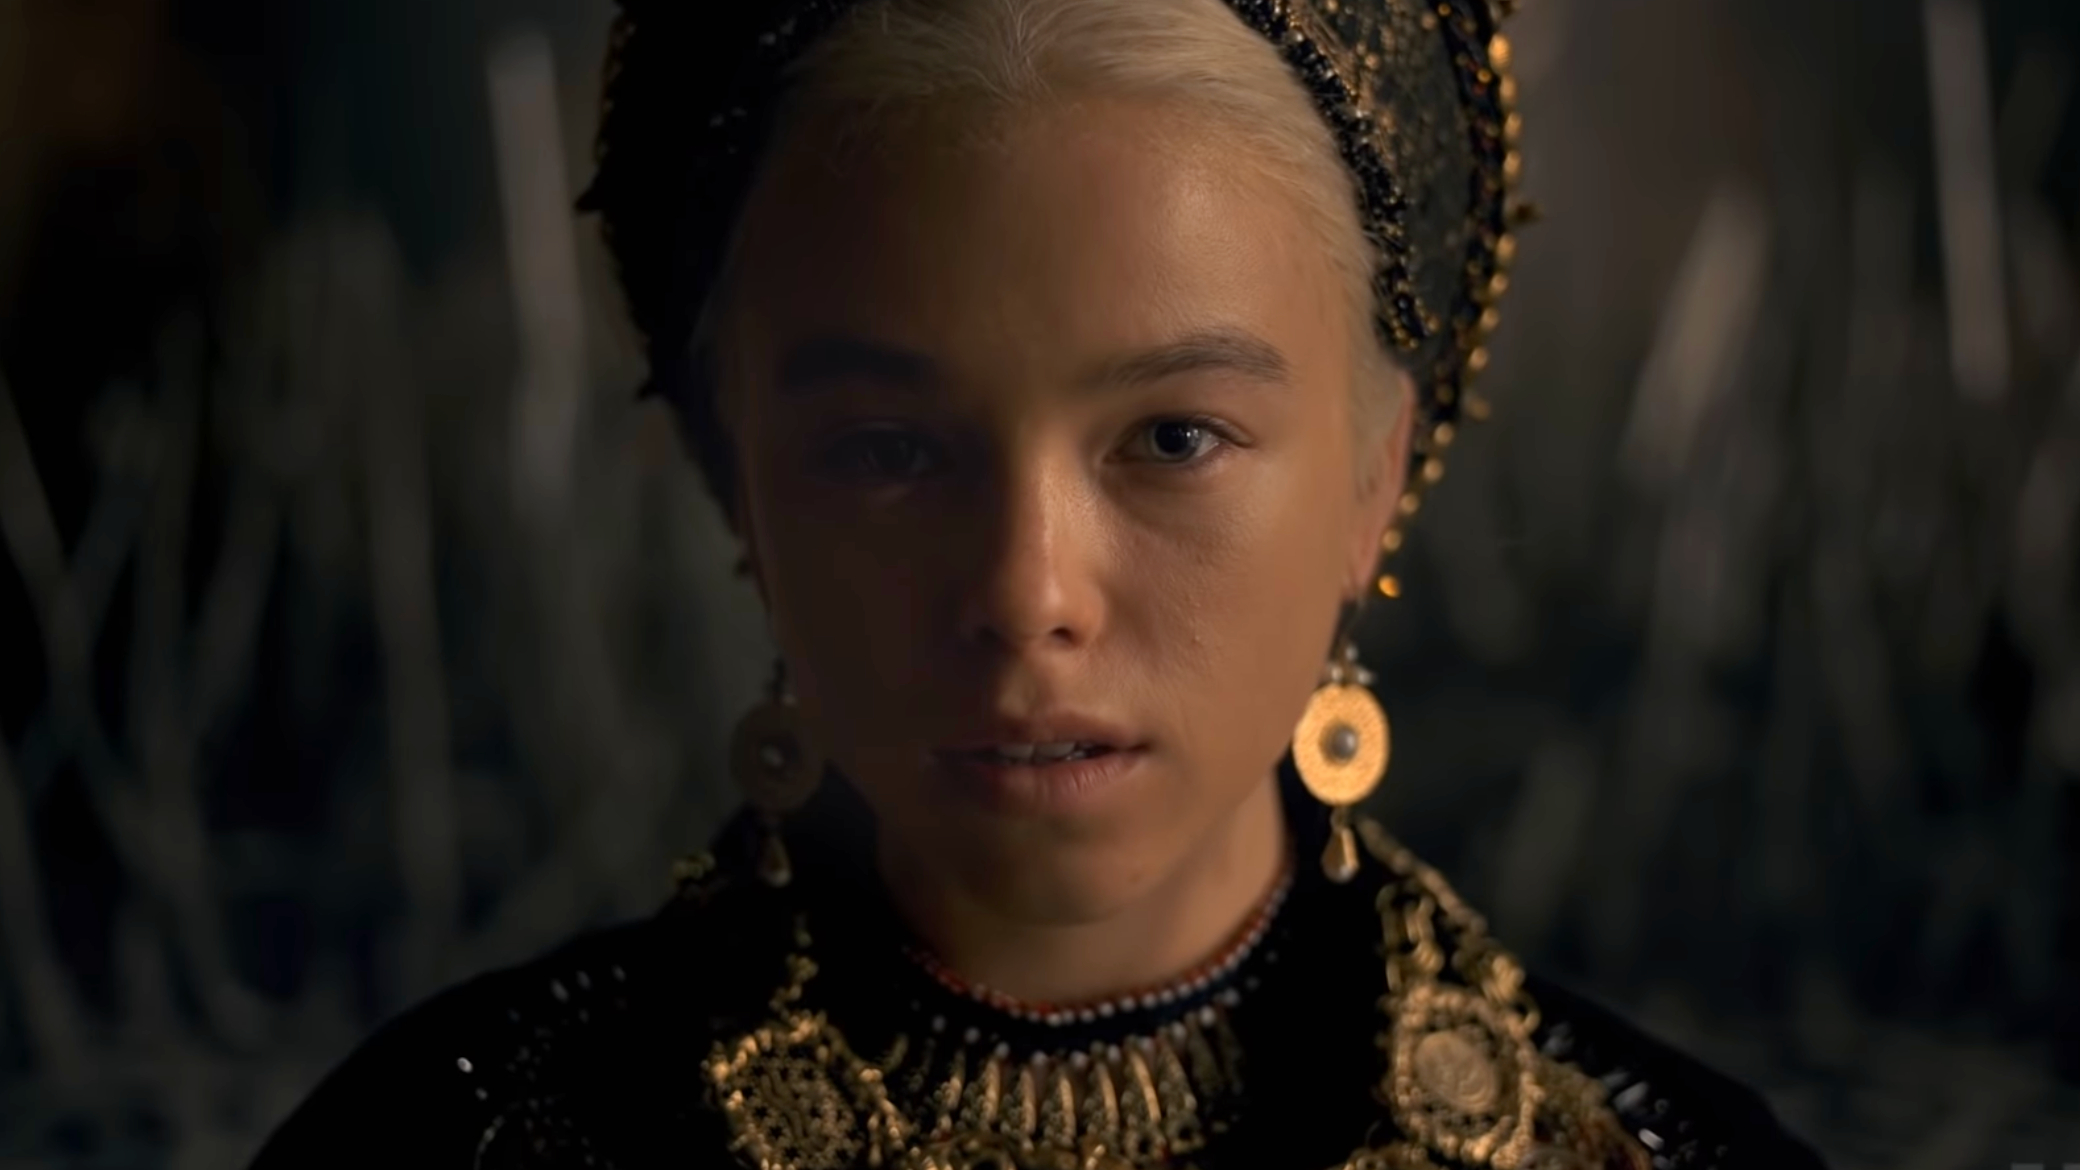 Milly Alcock as as Princess Rhaenyra Targaryen in "House of the Dragon."